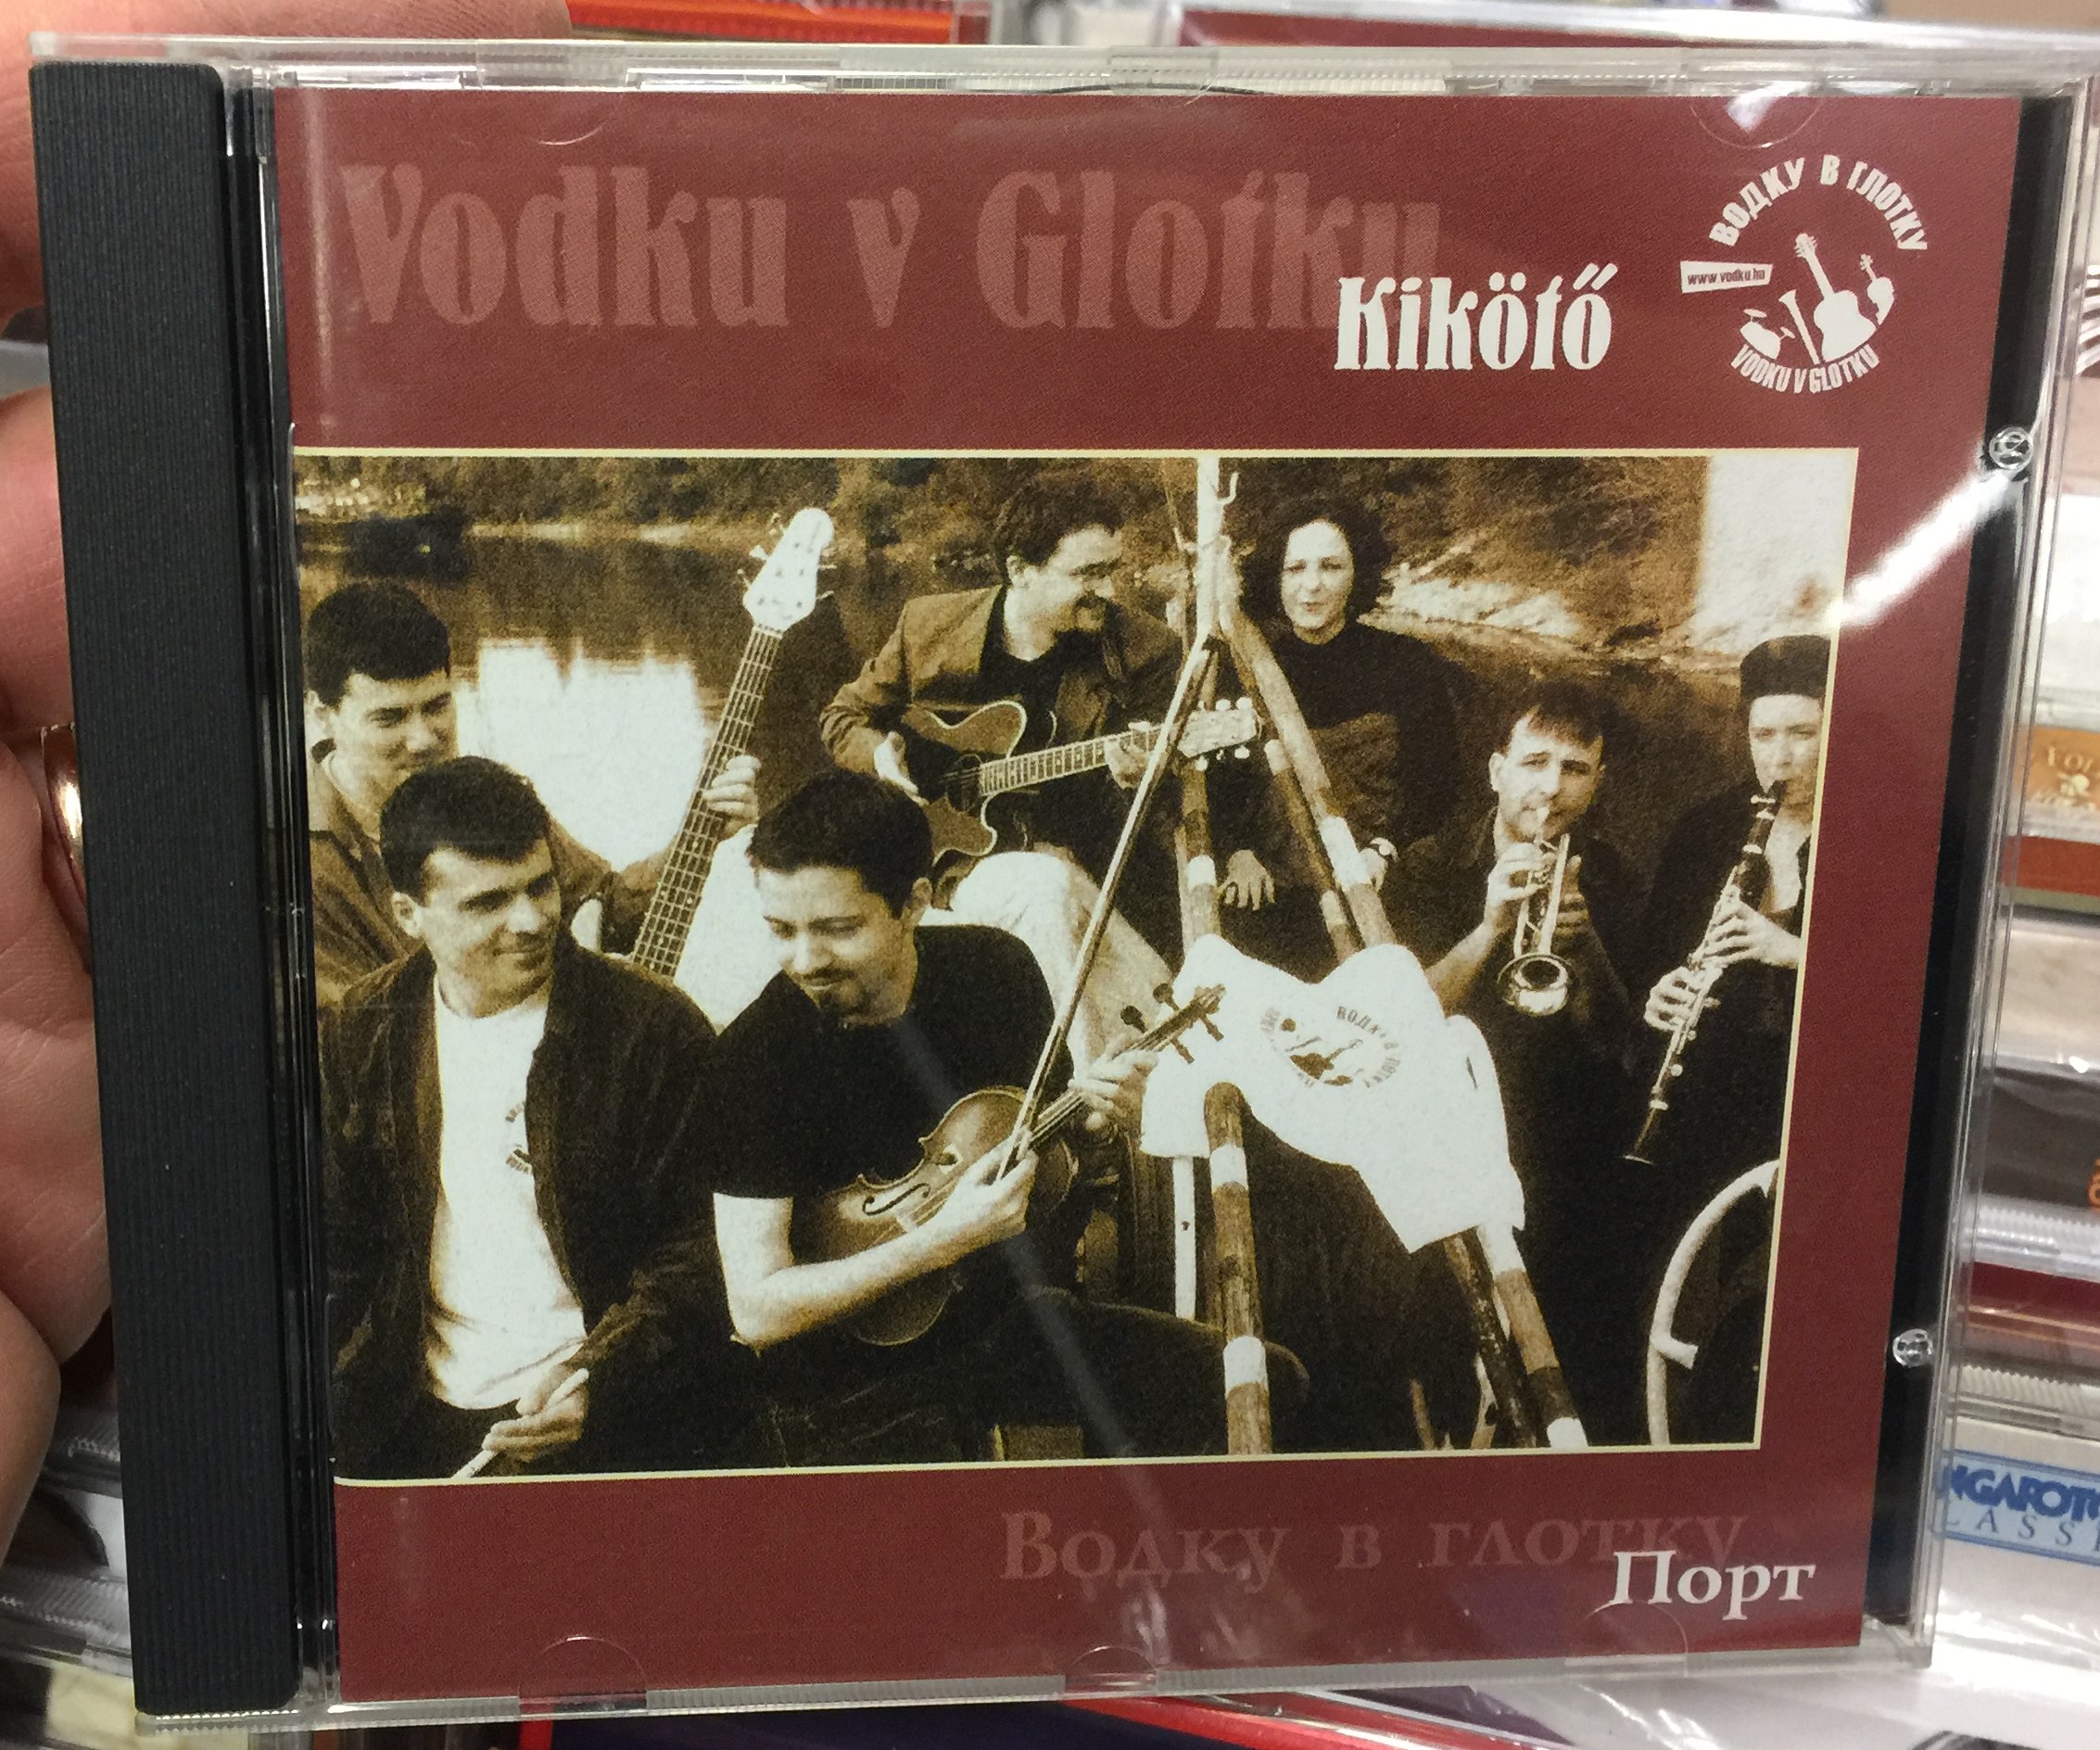 vodku-v-glotku-kik-t-etnofon-audio-cd-2004-vodku631224-1-.jpg